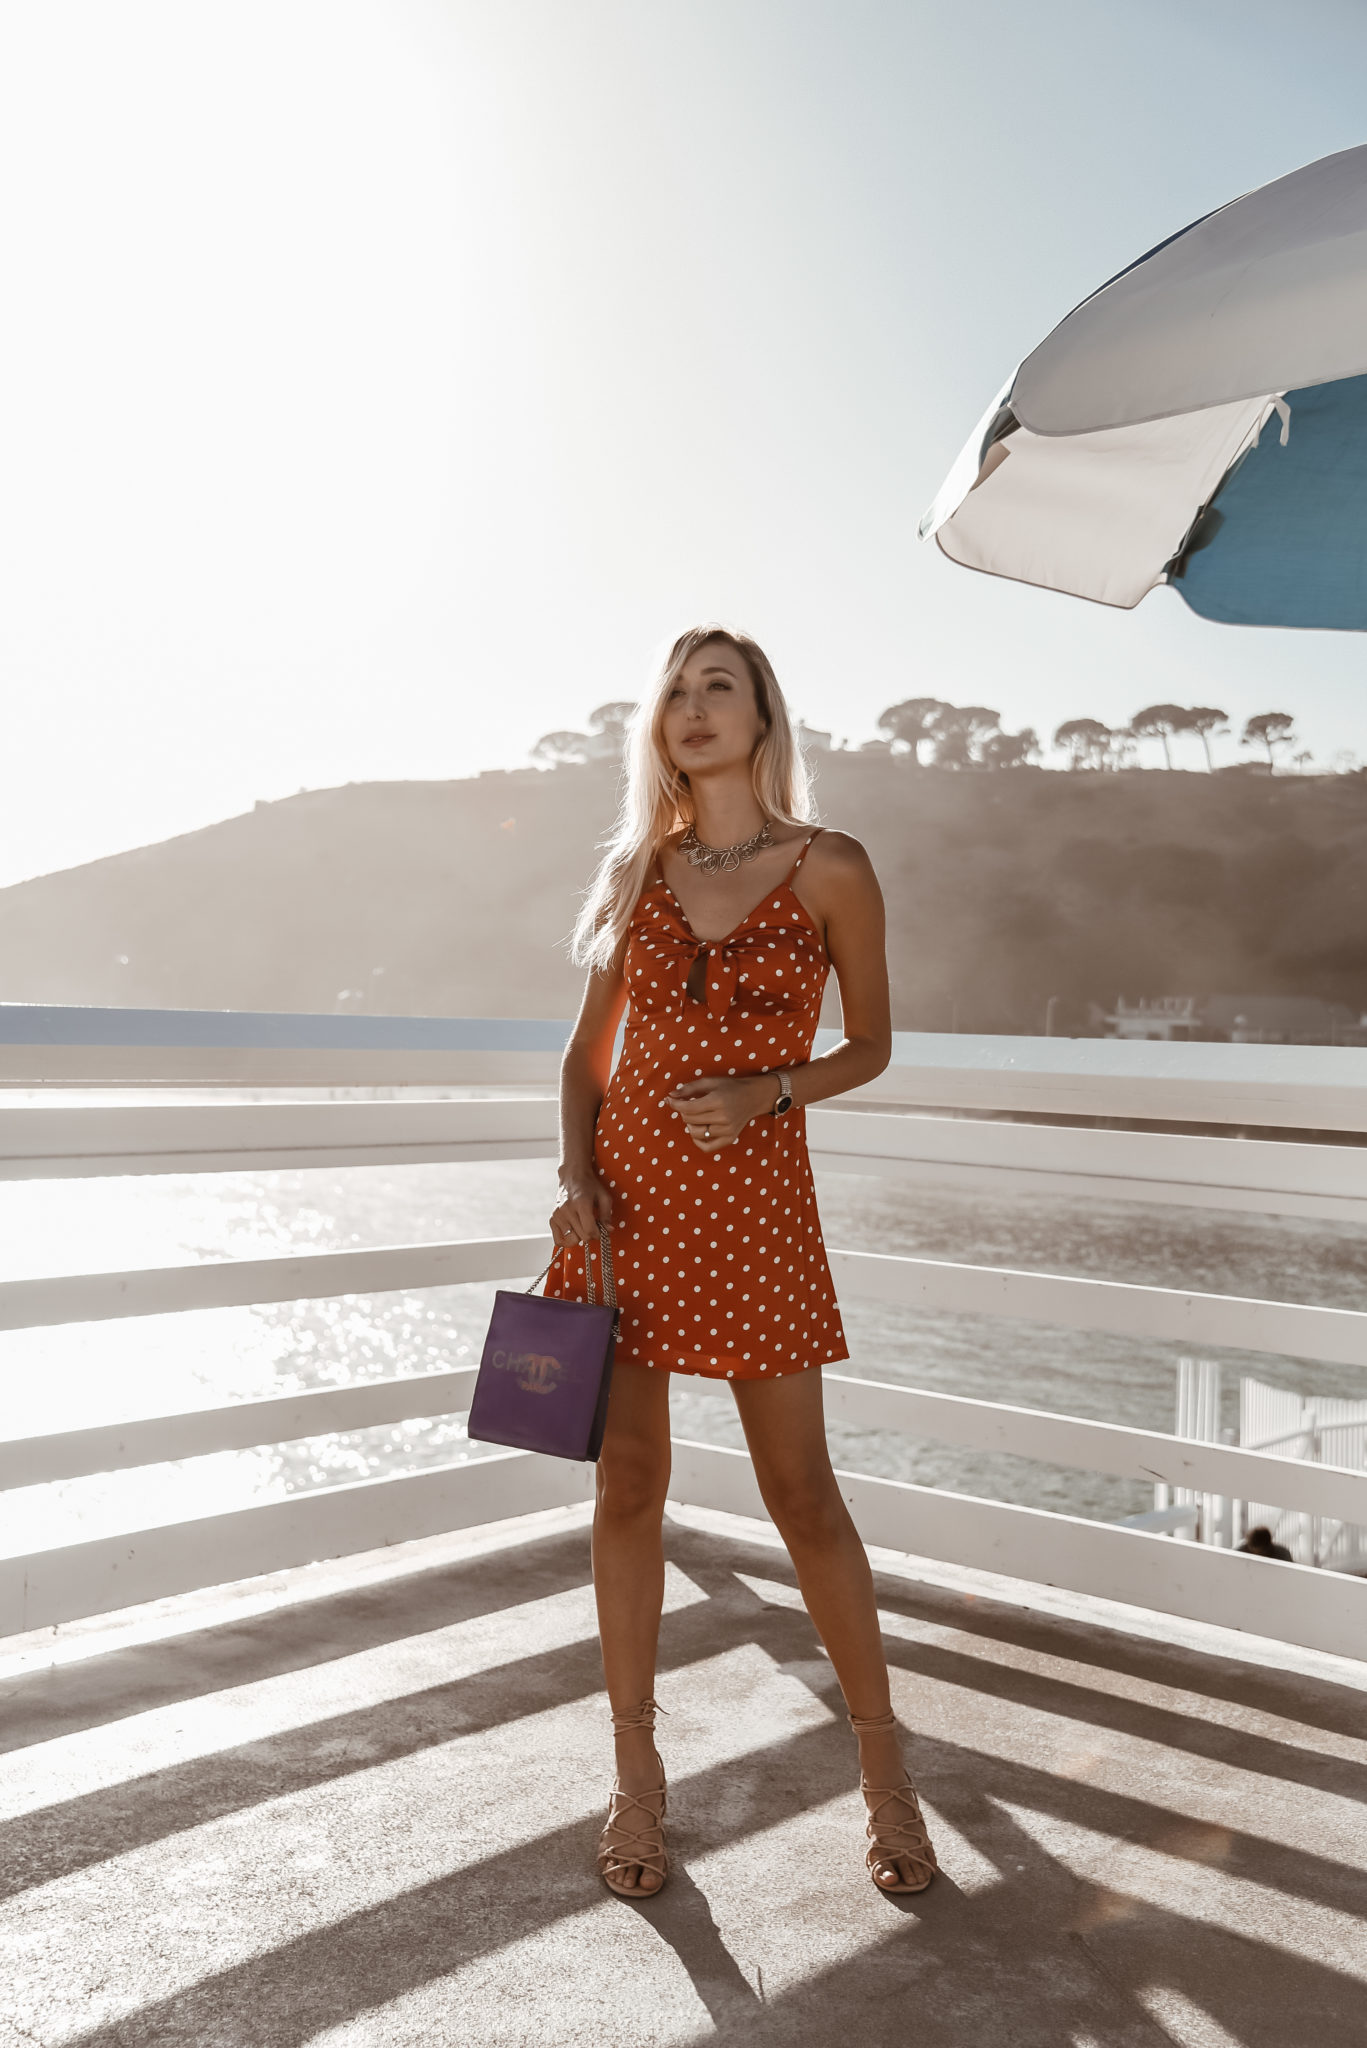 Malibu Sunset and a Polka Dot Mini-Dress